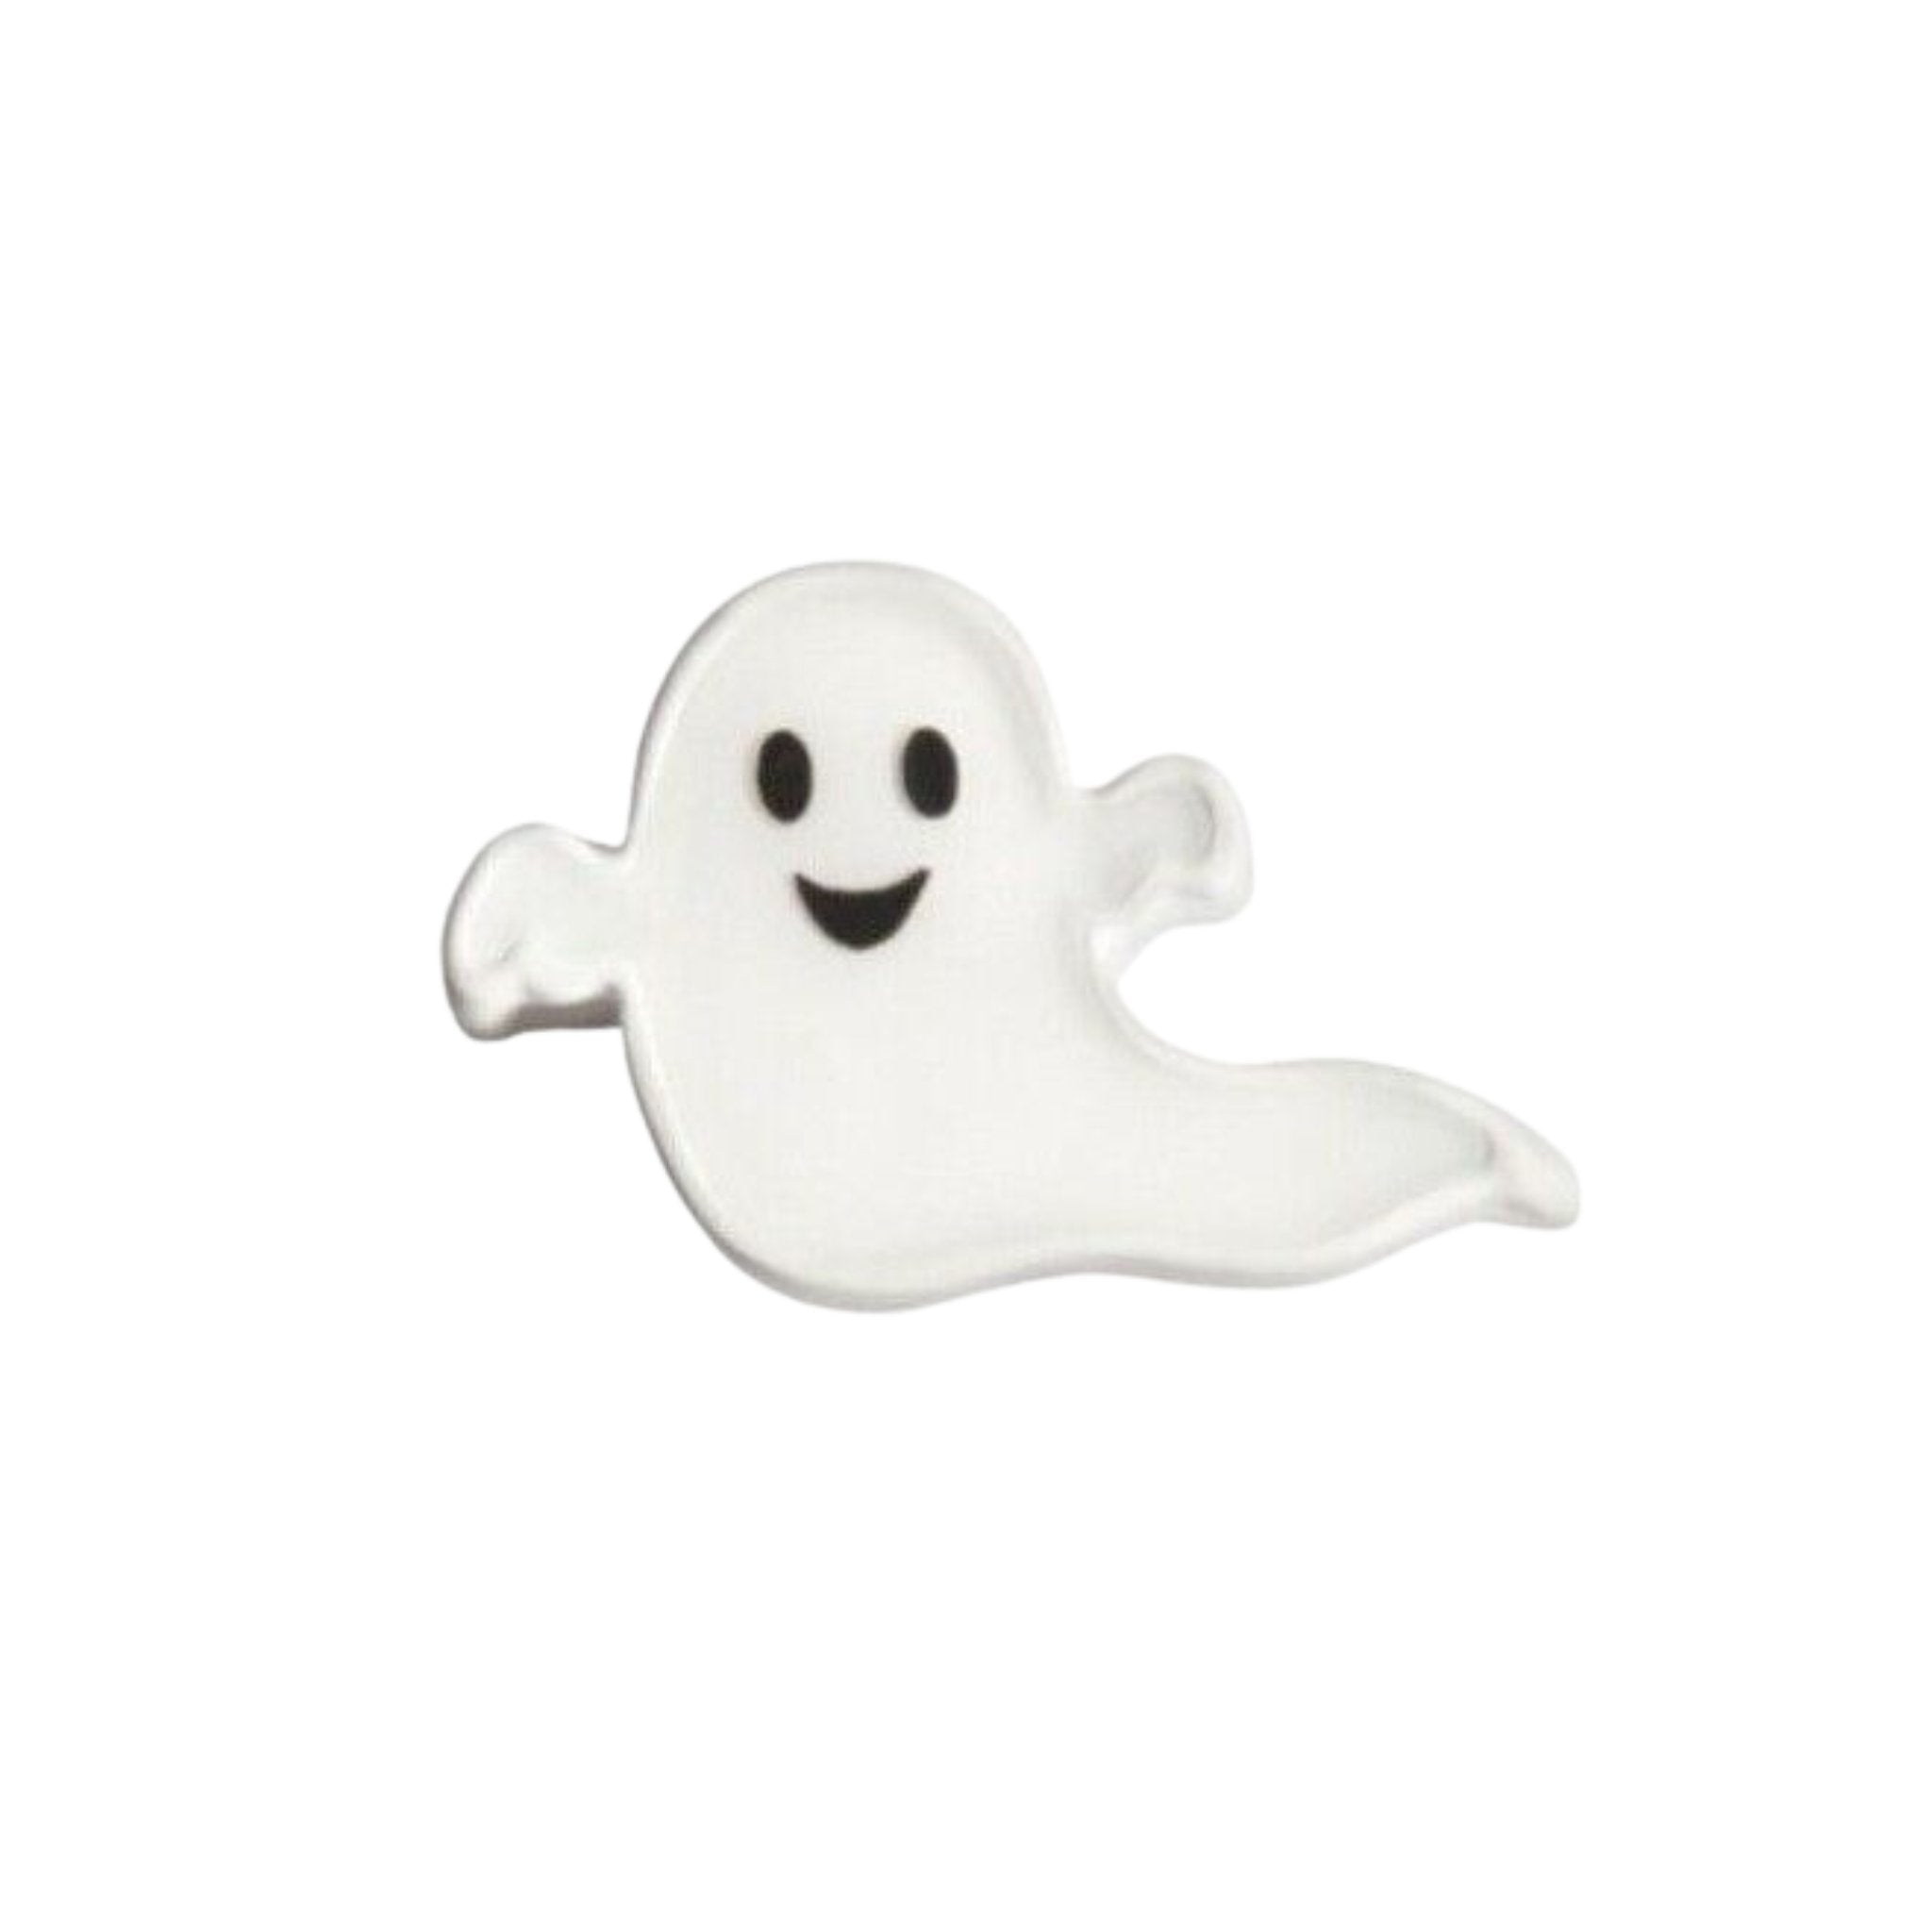 NEW! Memory Locket Charm - Cute Ghost